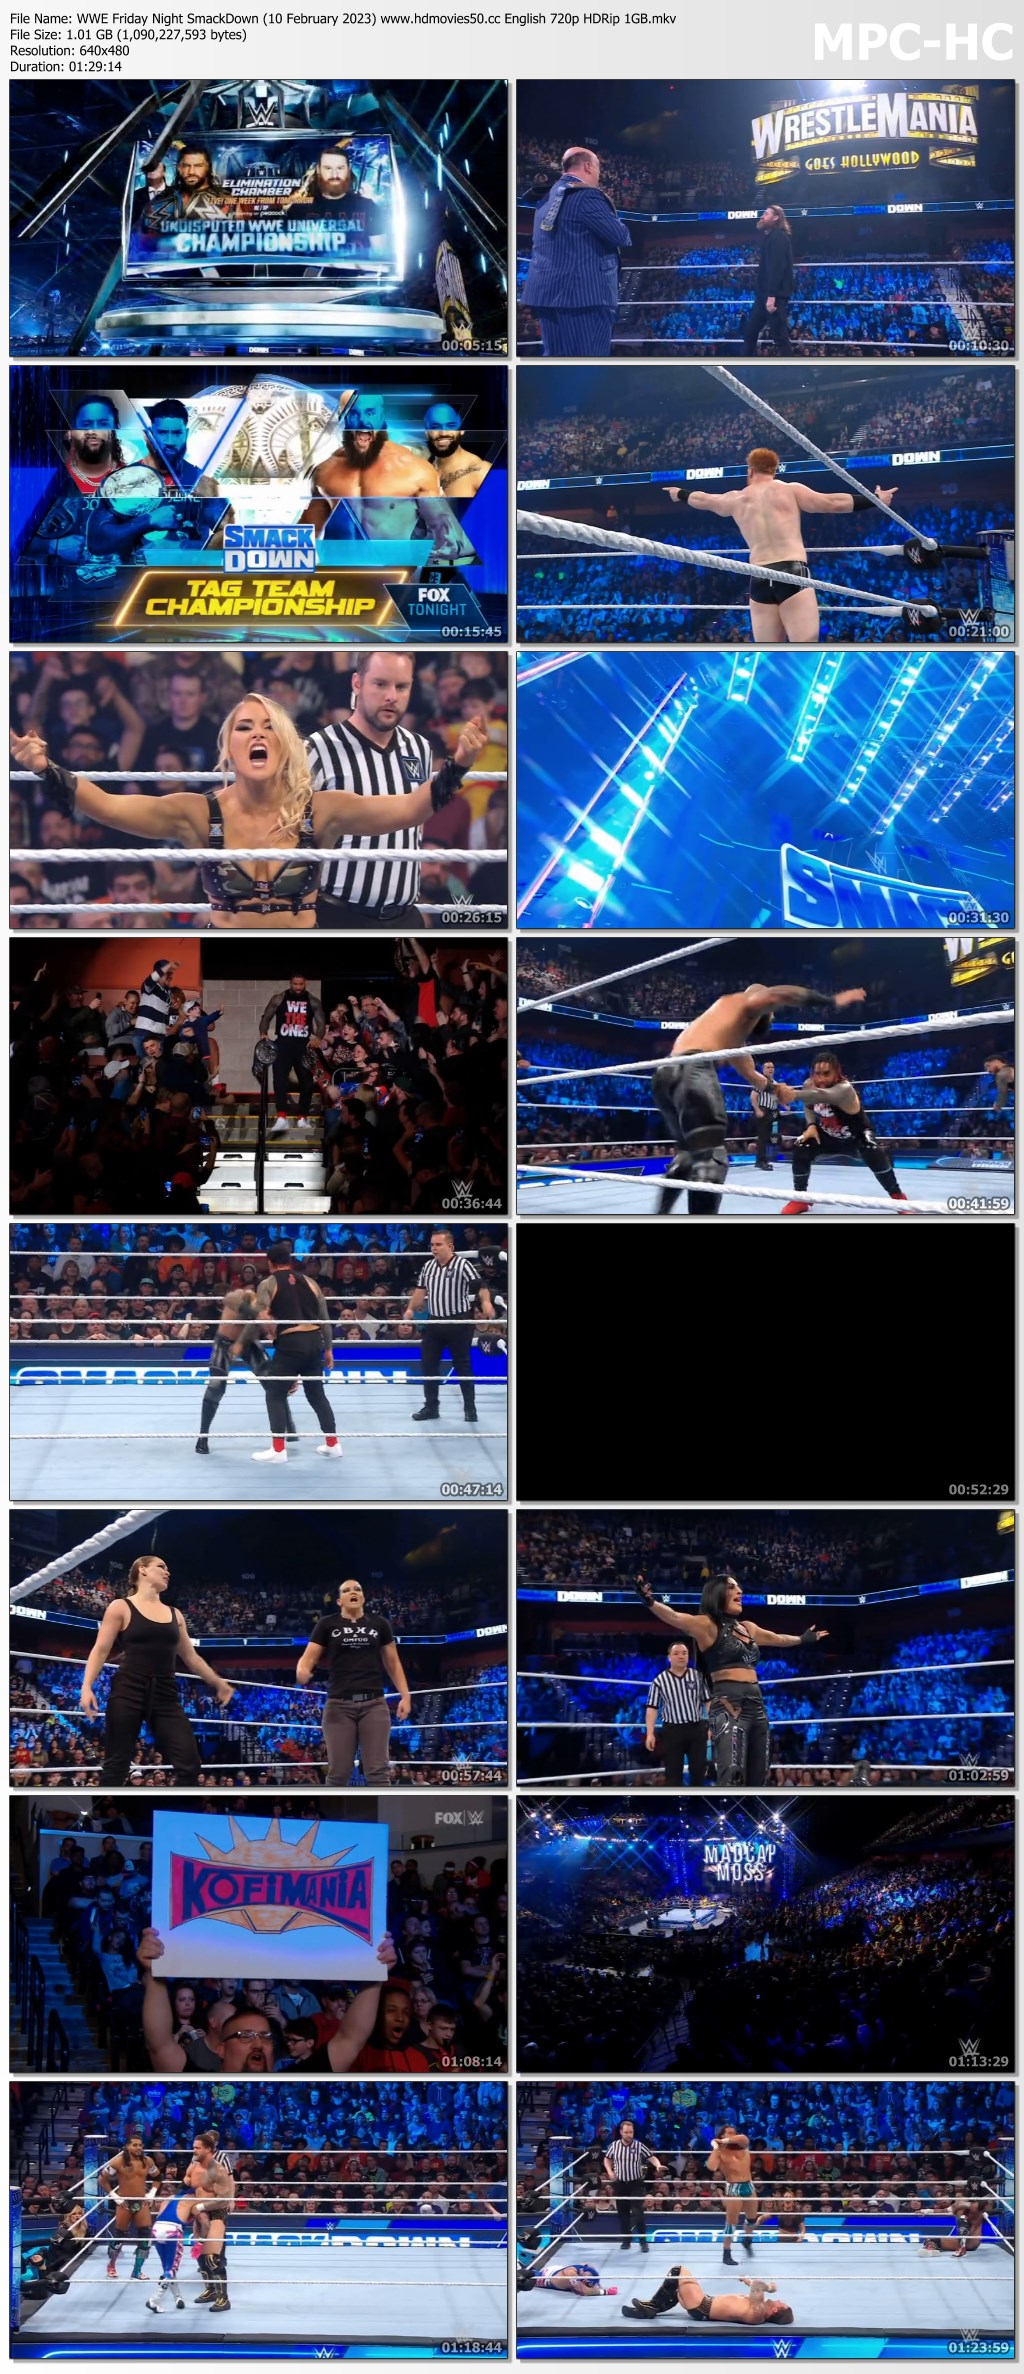 WWE Friday Night SmackDown 10 February 2023 www.hdmovies50.cc English 720p HDRip 1GB.mkv thumbs